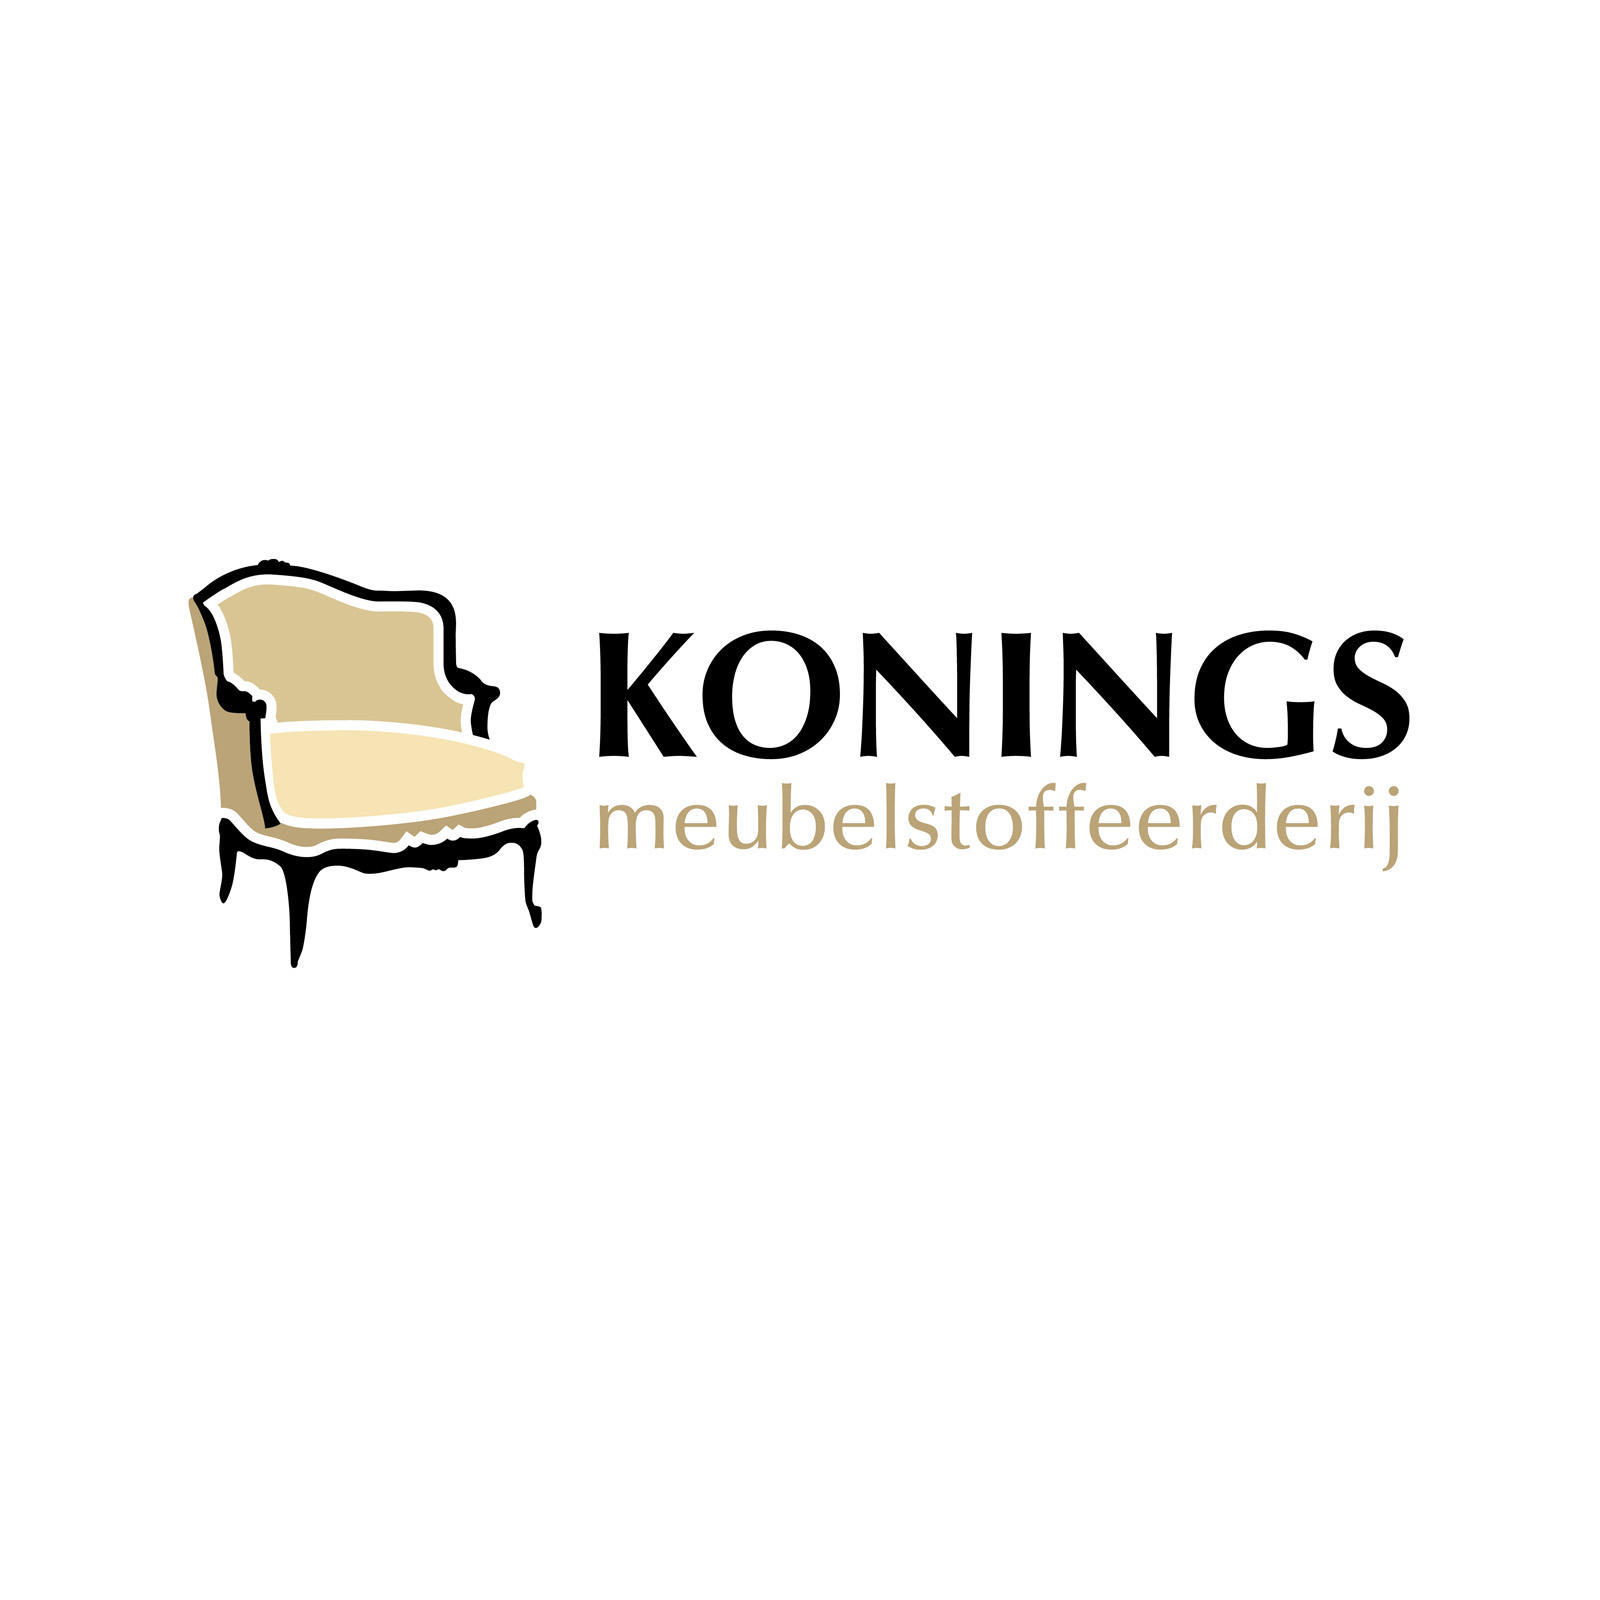 Konings Meubelstoffeerderij Logo